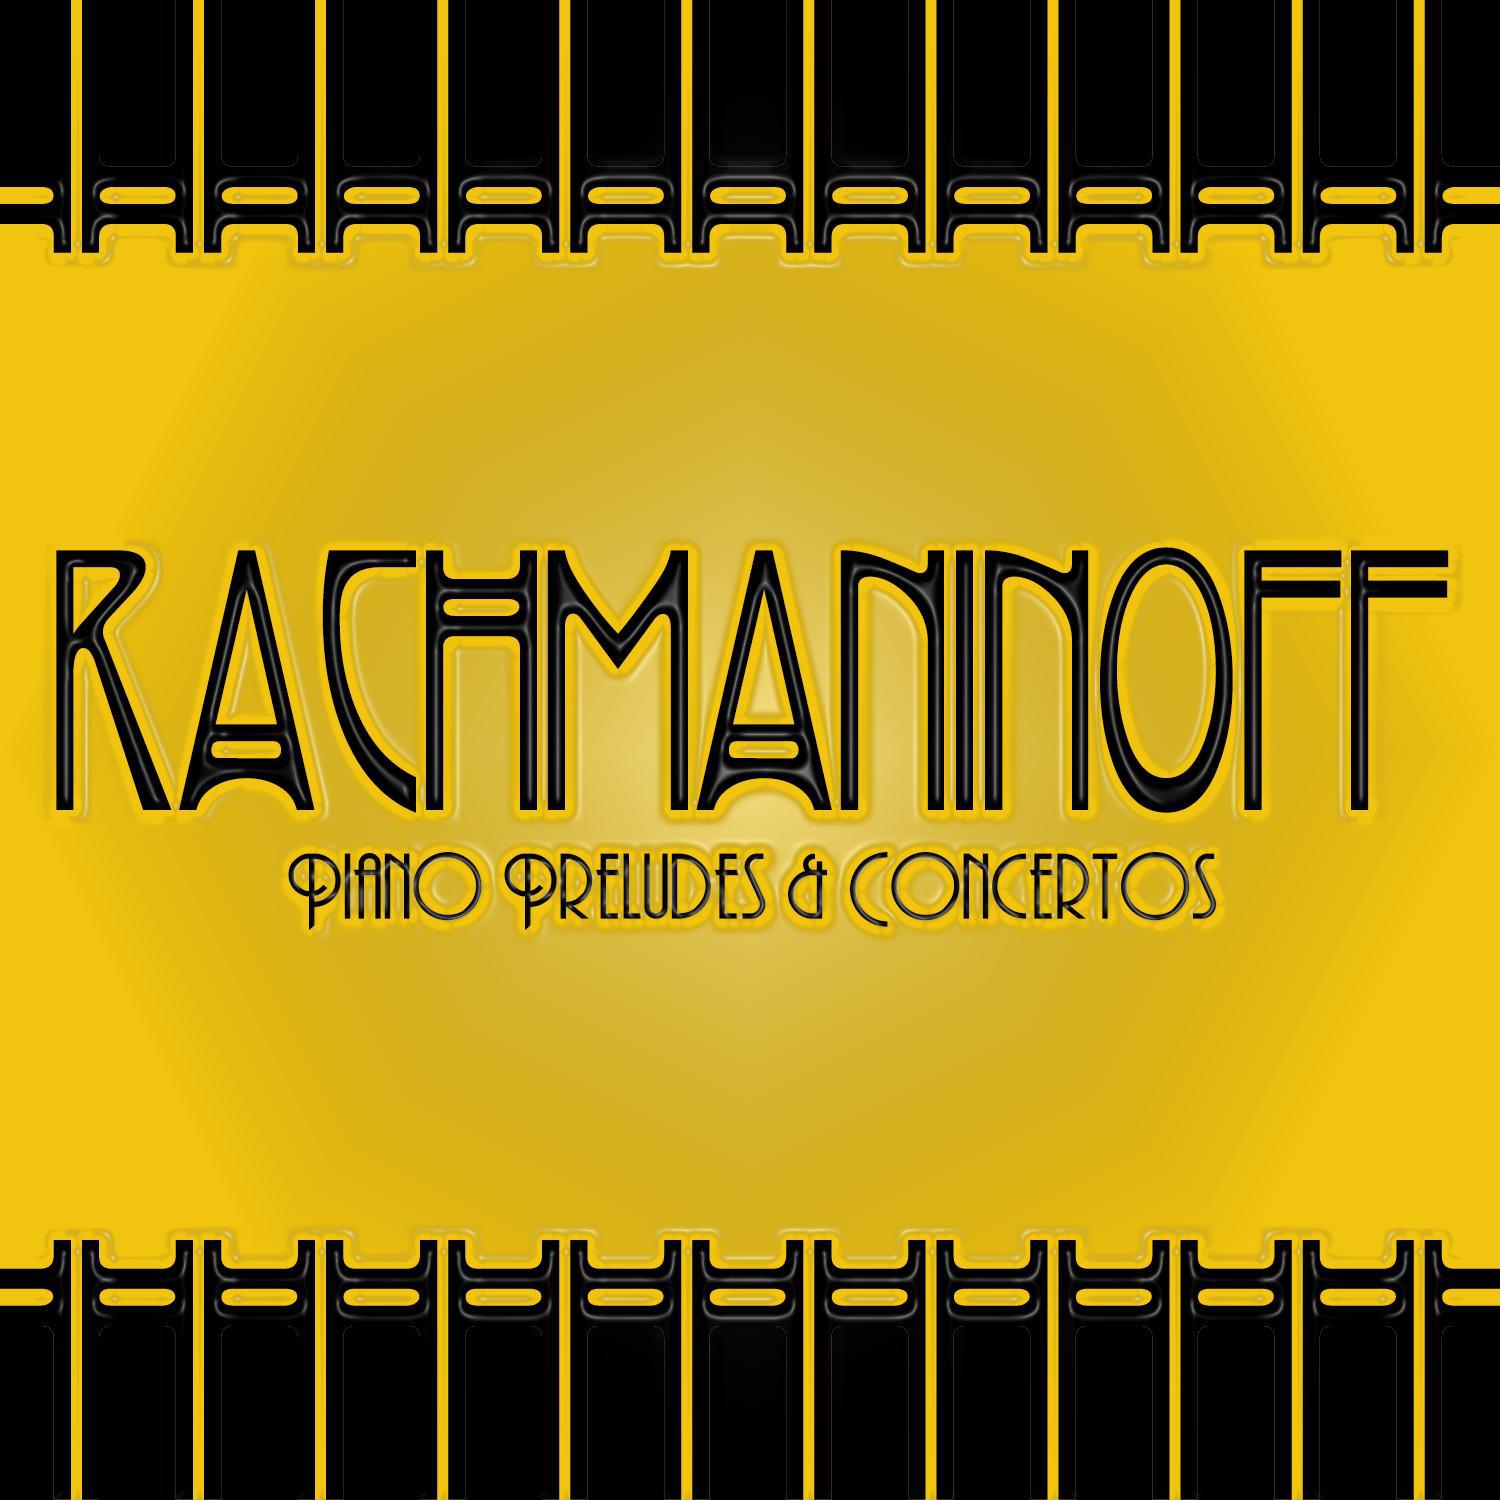 Sergei Rachmaninoff - 10 Preludes, Op. 23: No. 4 in D Major: Andante cantabile